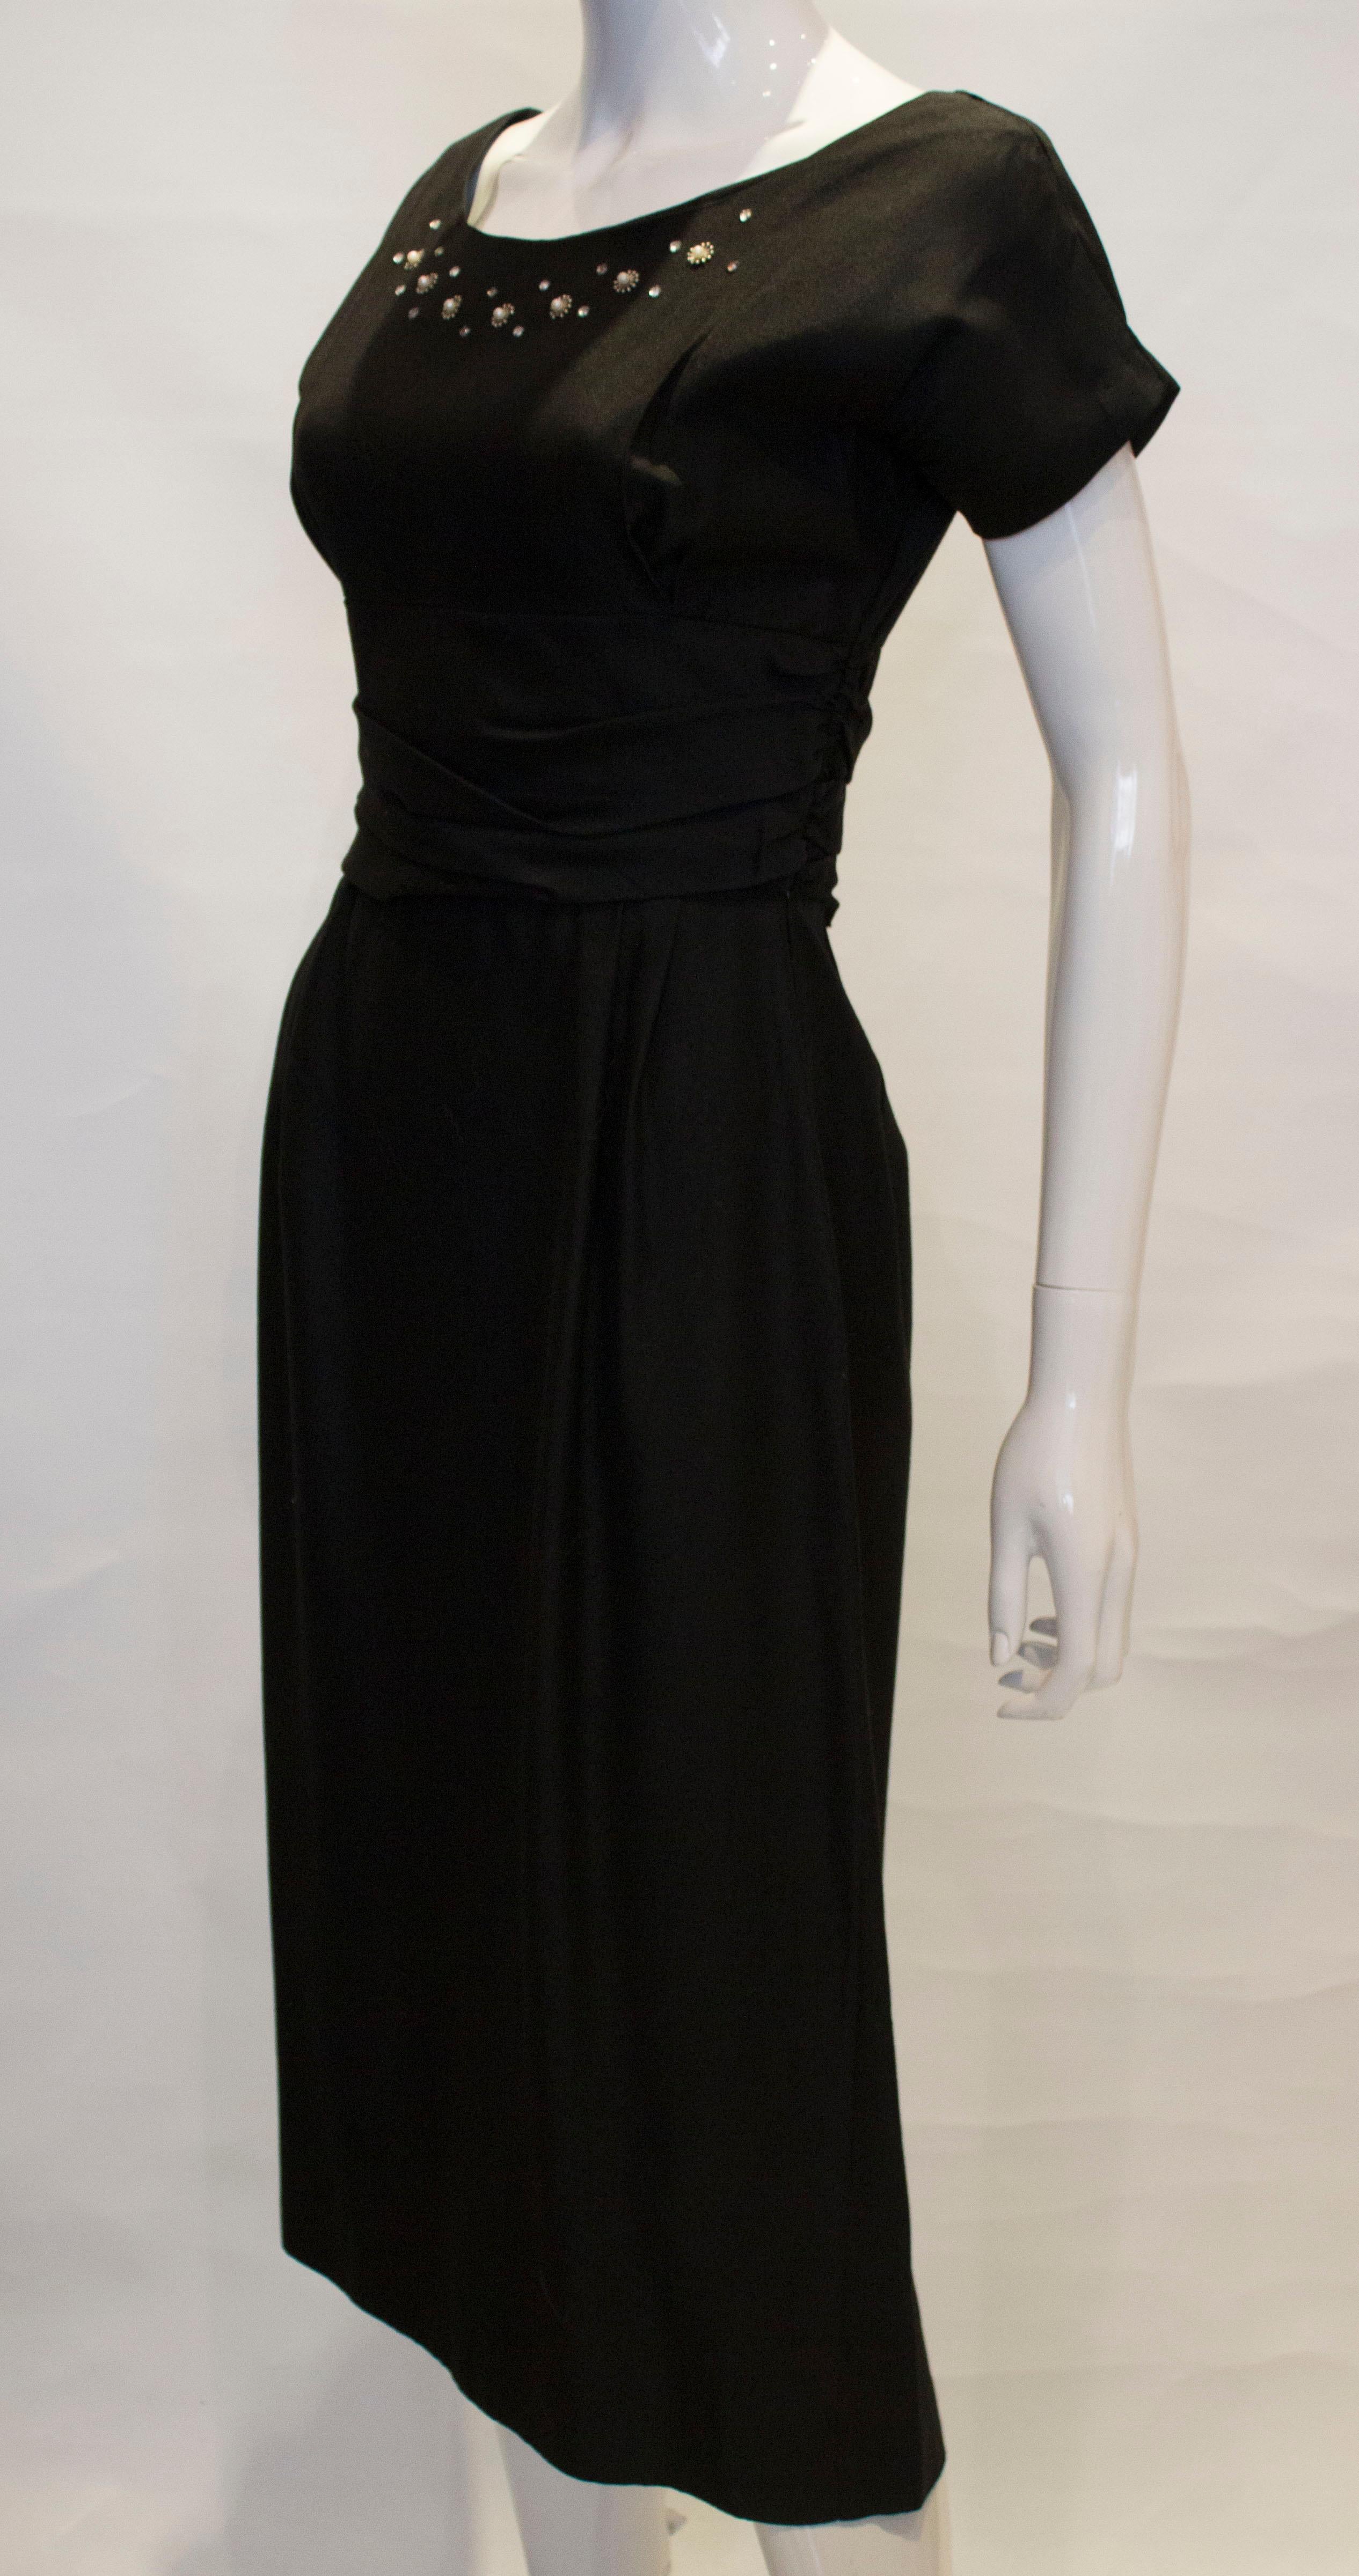 Women's Vintage 1950s Black Cocktail Dress For Sale